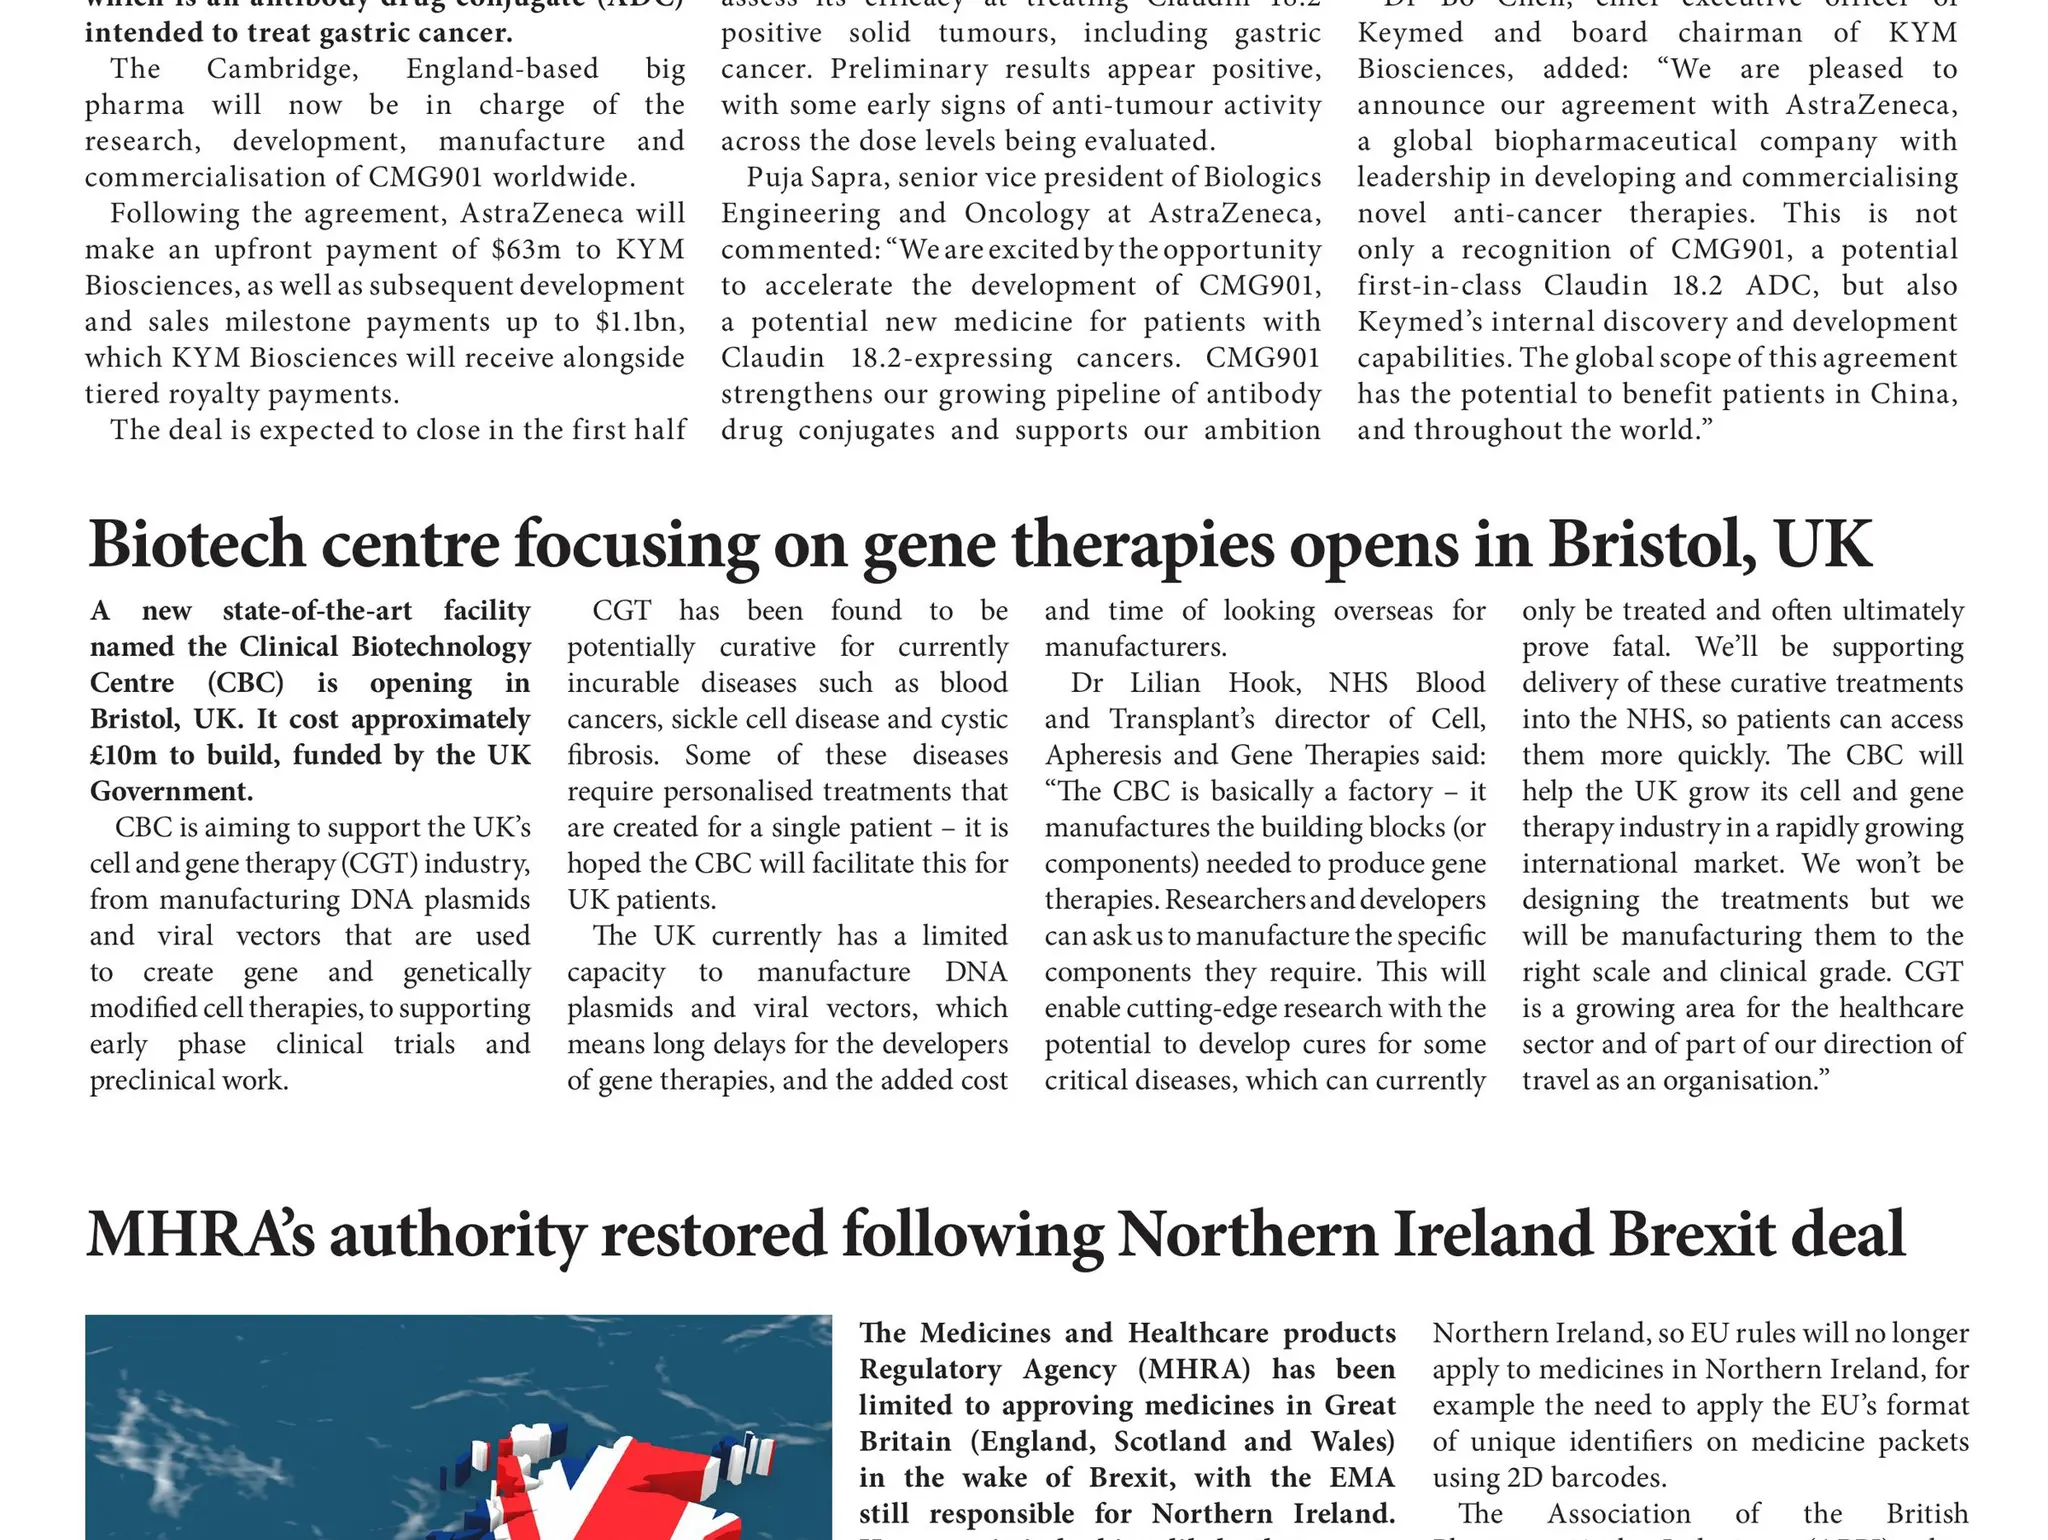 Biotech centre focusing on gene therapies opens in Bristol, UK